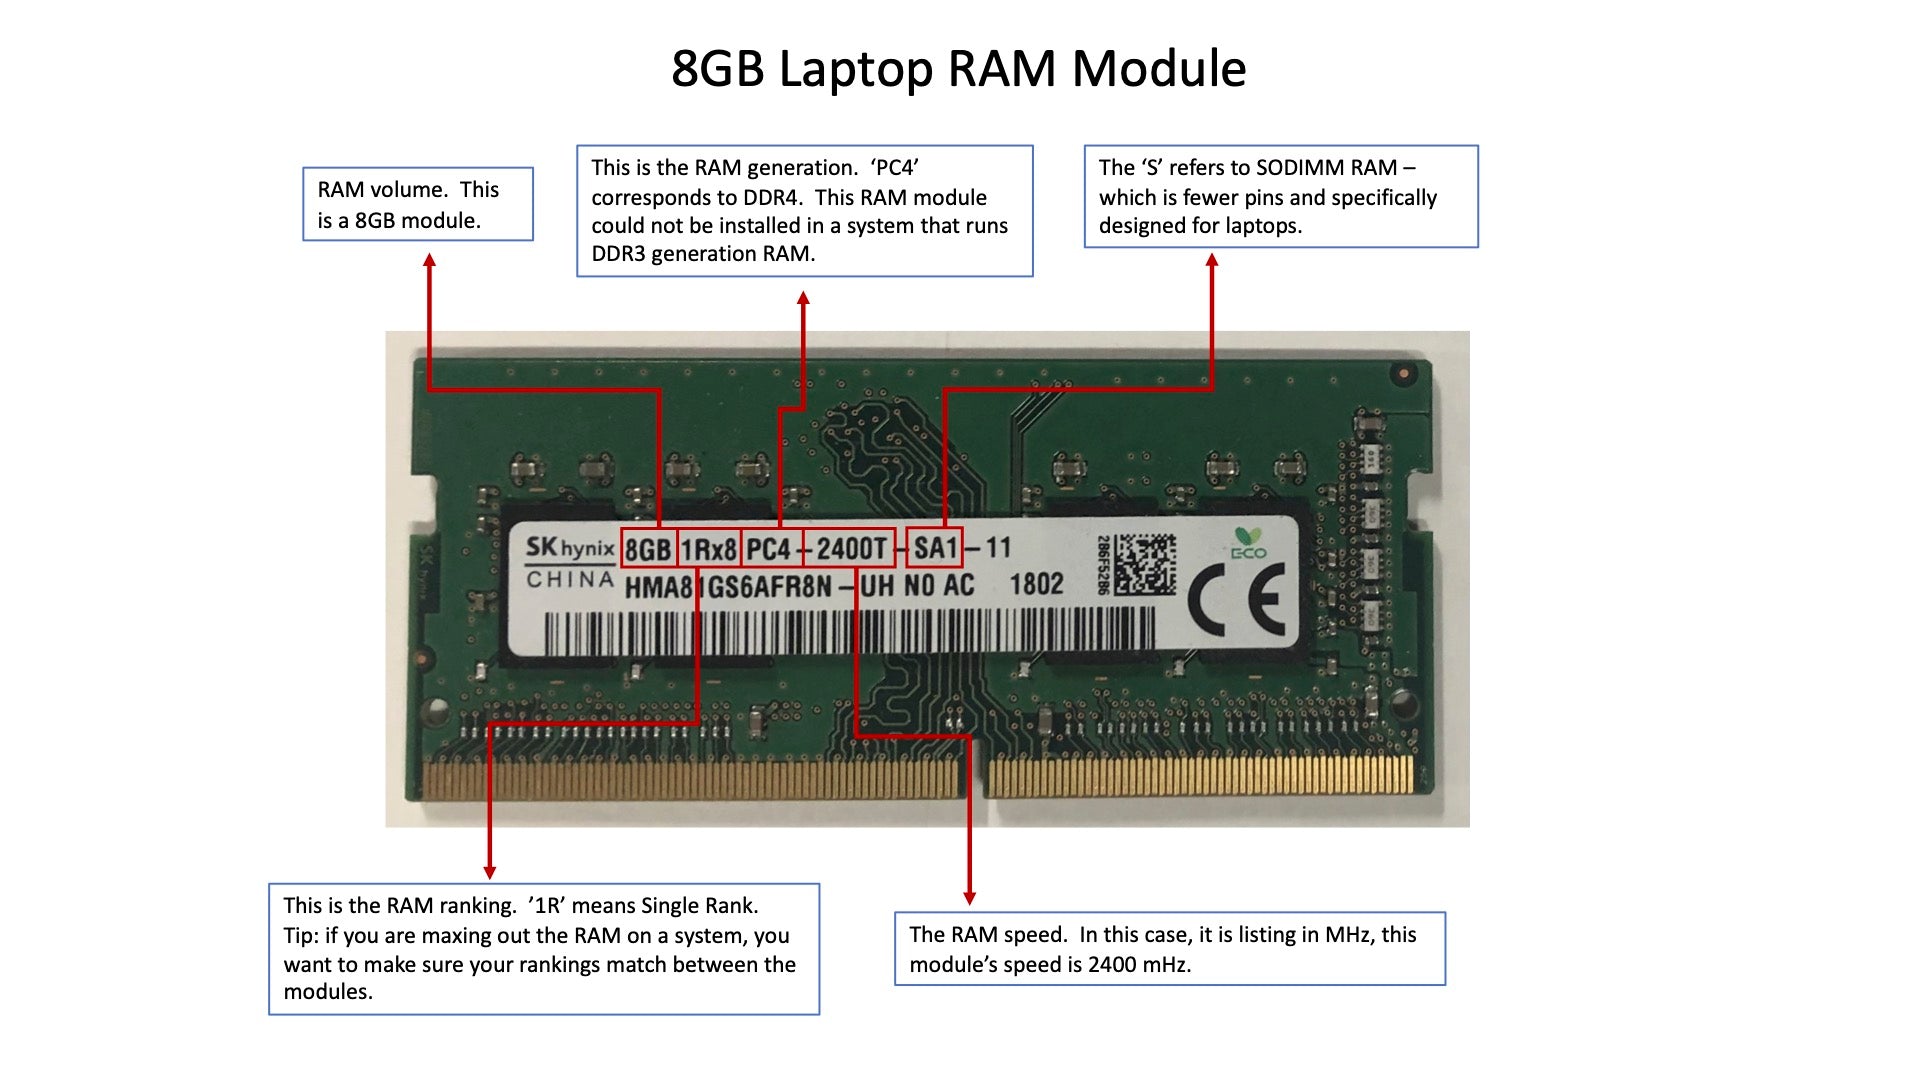 Dinkarville Marquee ækvator How to Identify Laptop & Desktop RAM Specs | Buying RAM – TechMikeNY